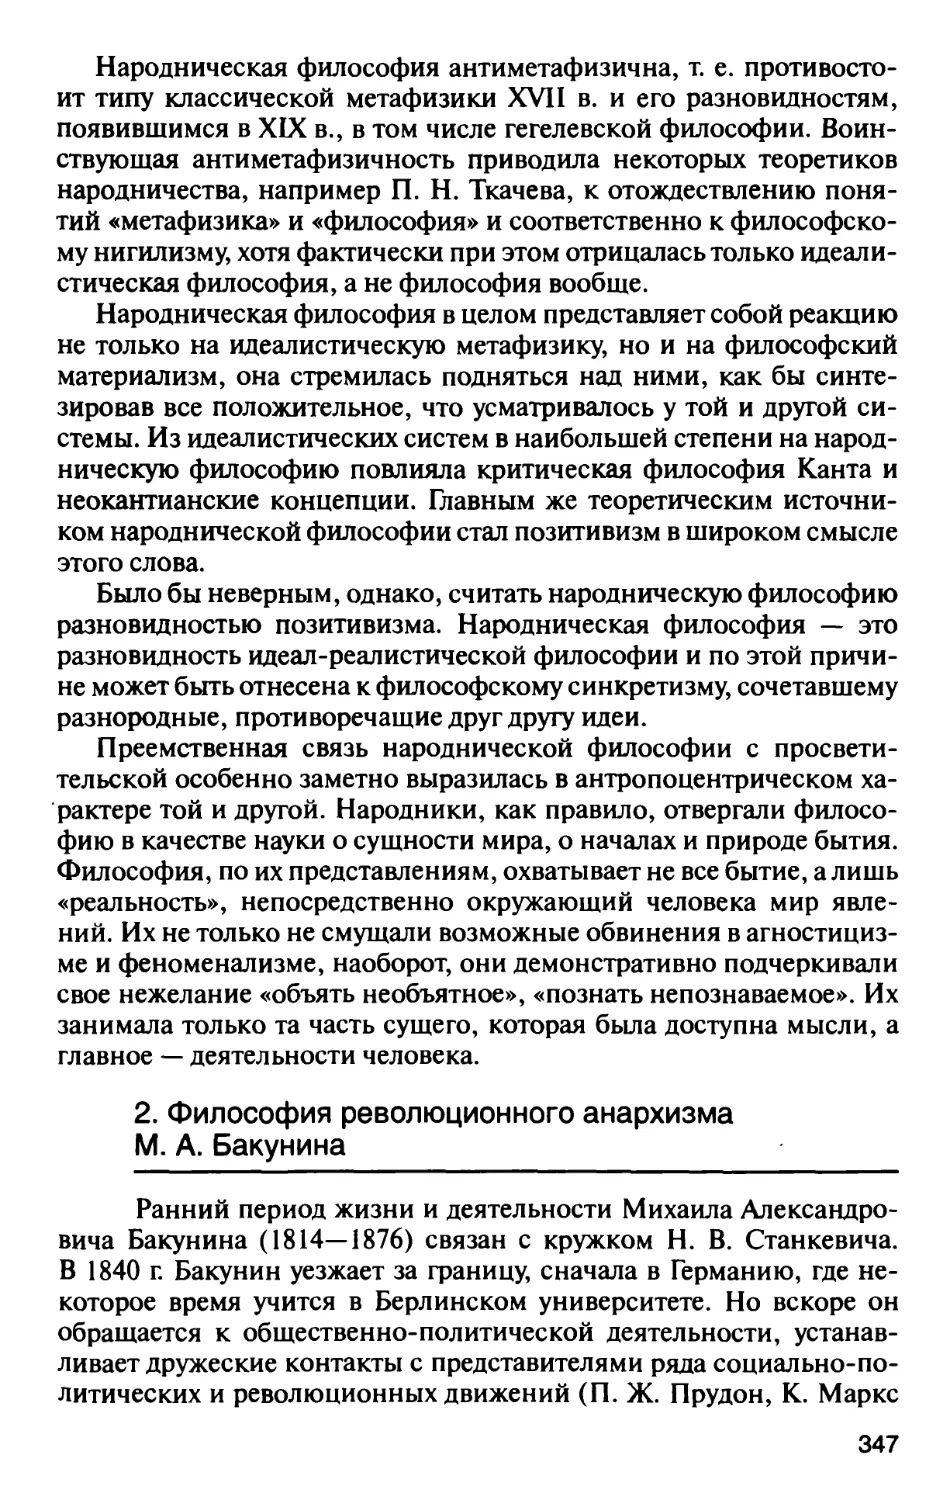 2. Философия революционного анархизма М.А. Бакунина